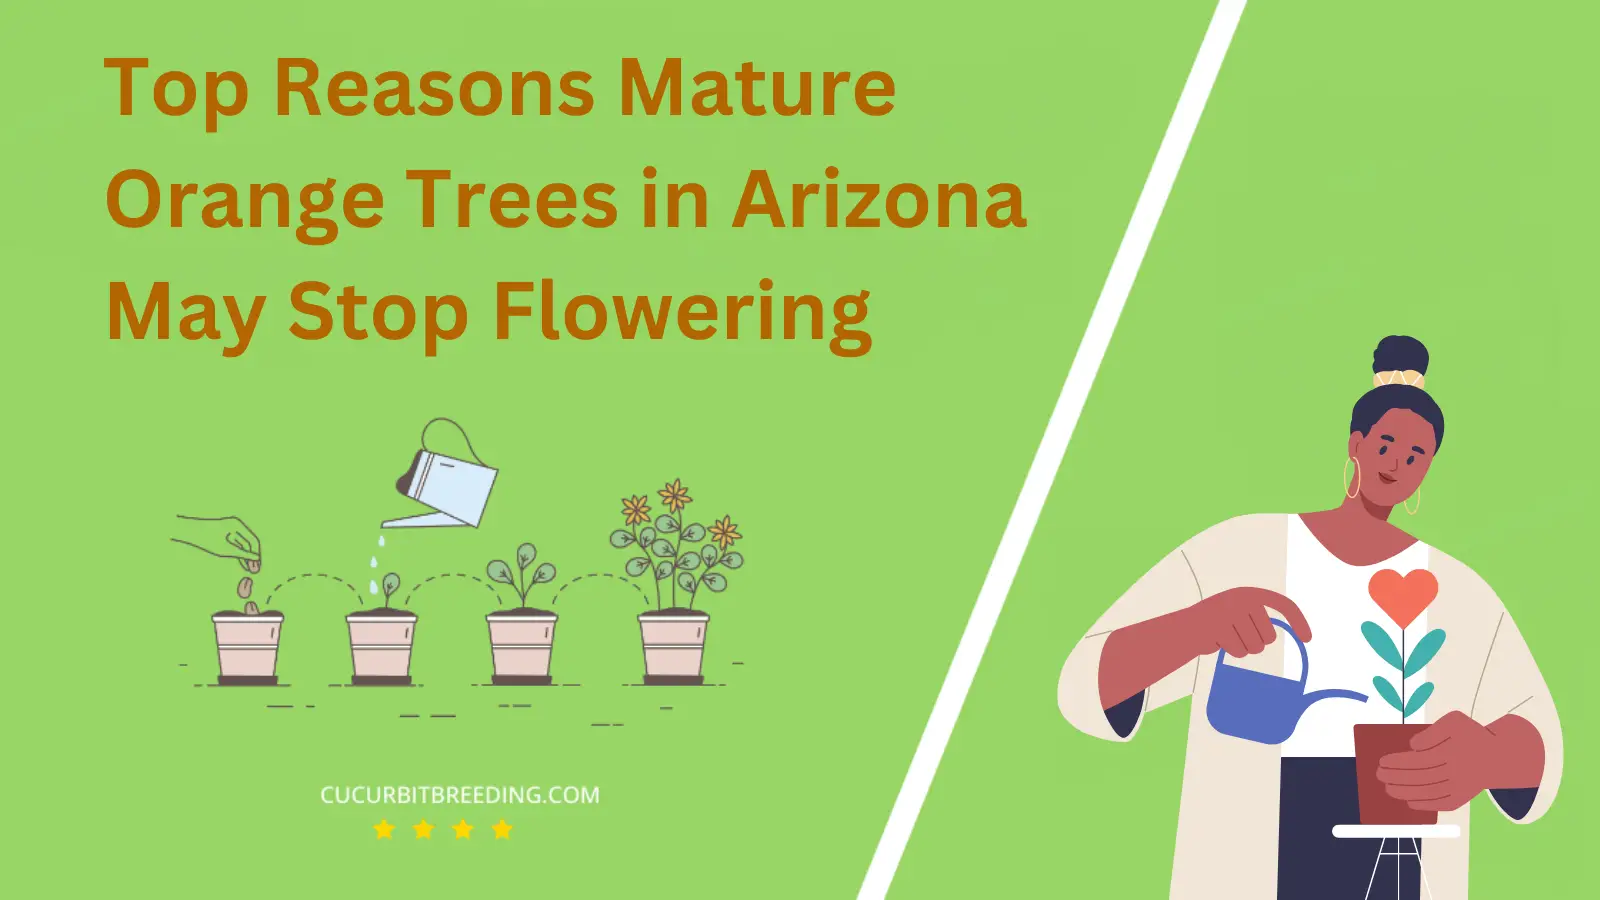 Top Reasons Mature Orange Trees in Arizona May Stop Flowering